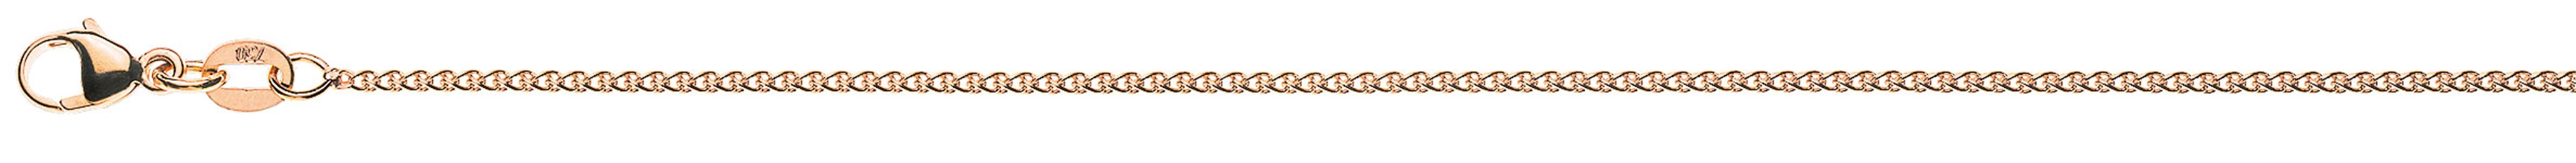 AURONOS Prestige Necklace rose gold 18K braided chain 42cm 1.2mm